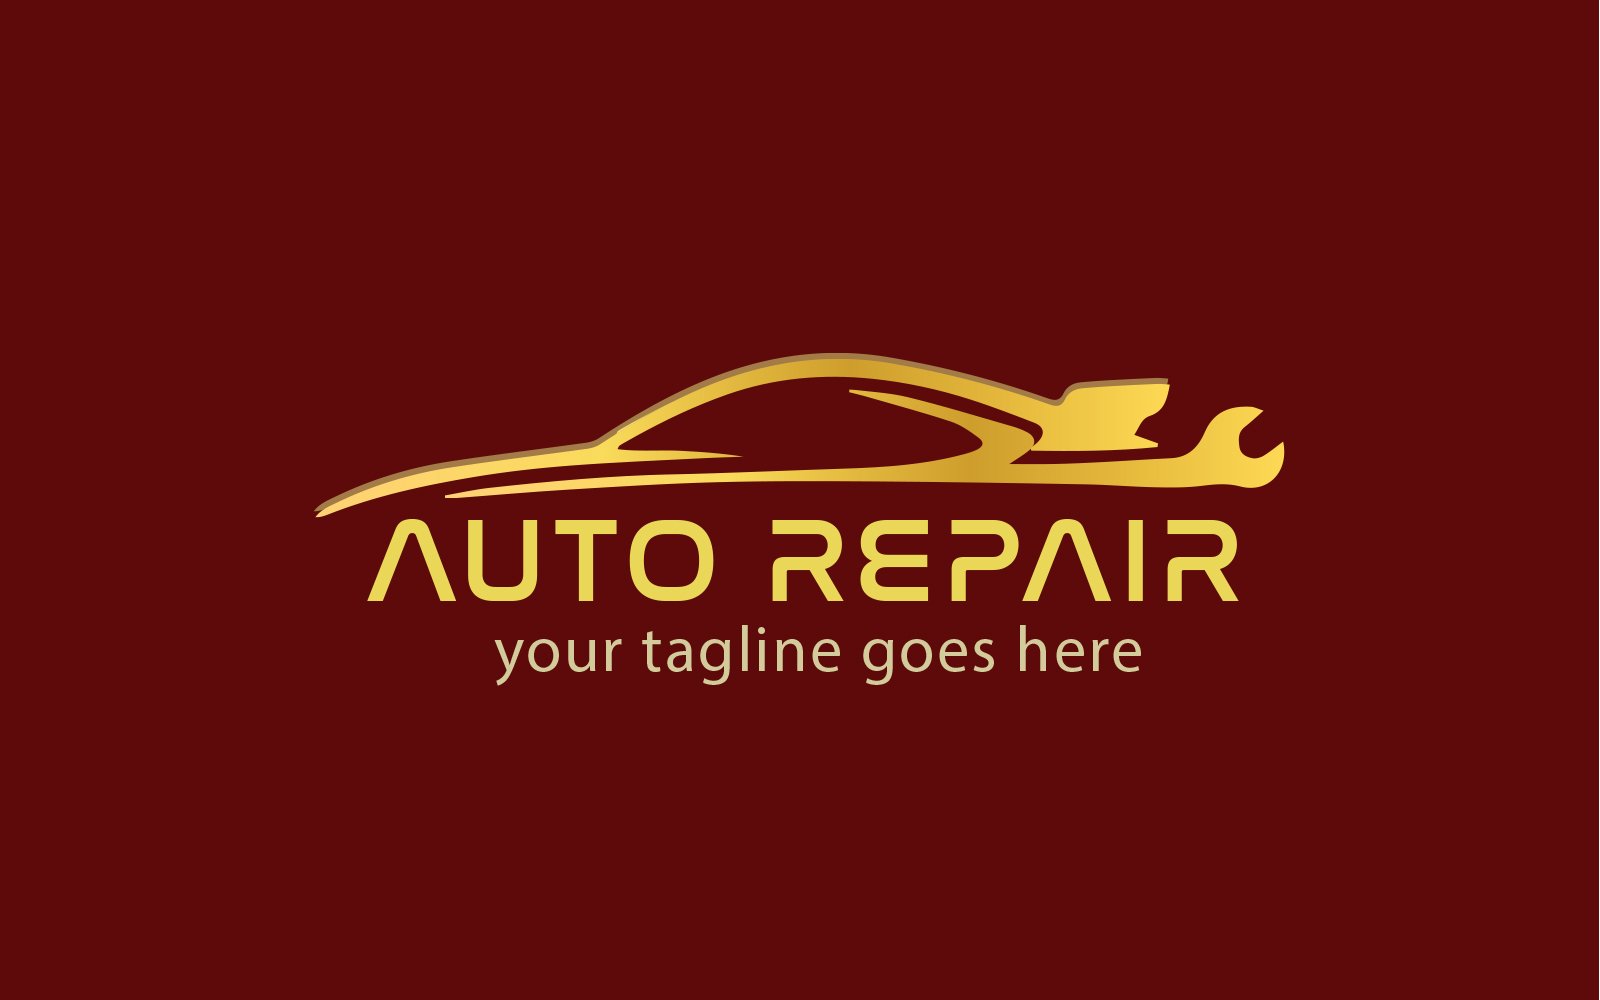 Template #281545 Auto Repair Webdesign Template - Logo template Preview